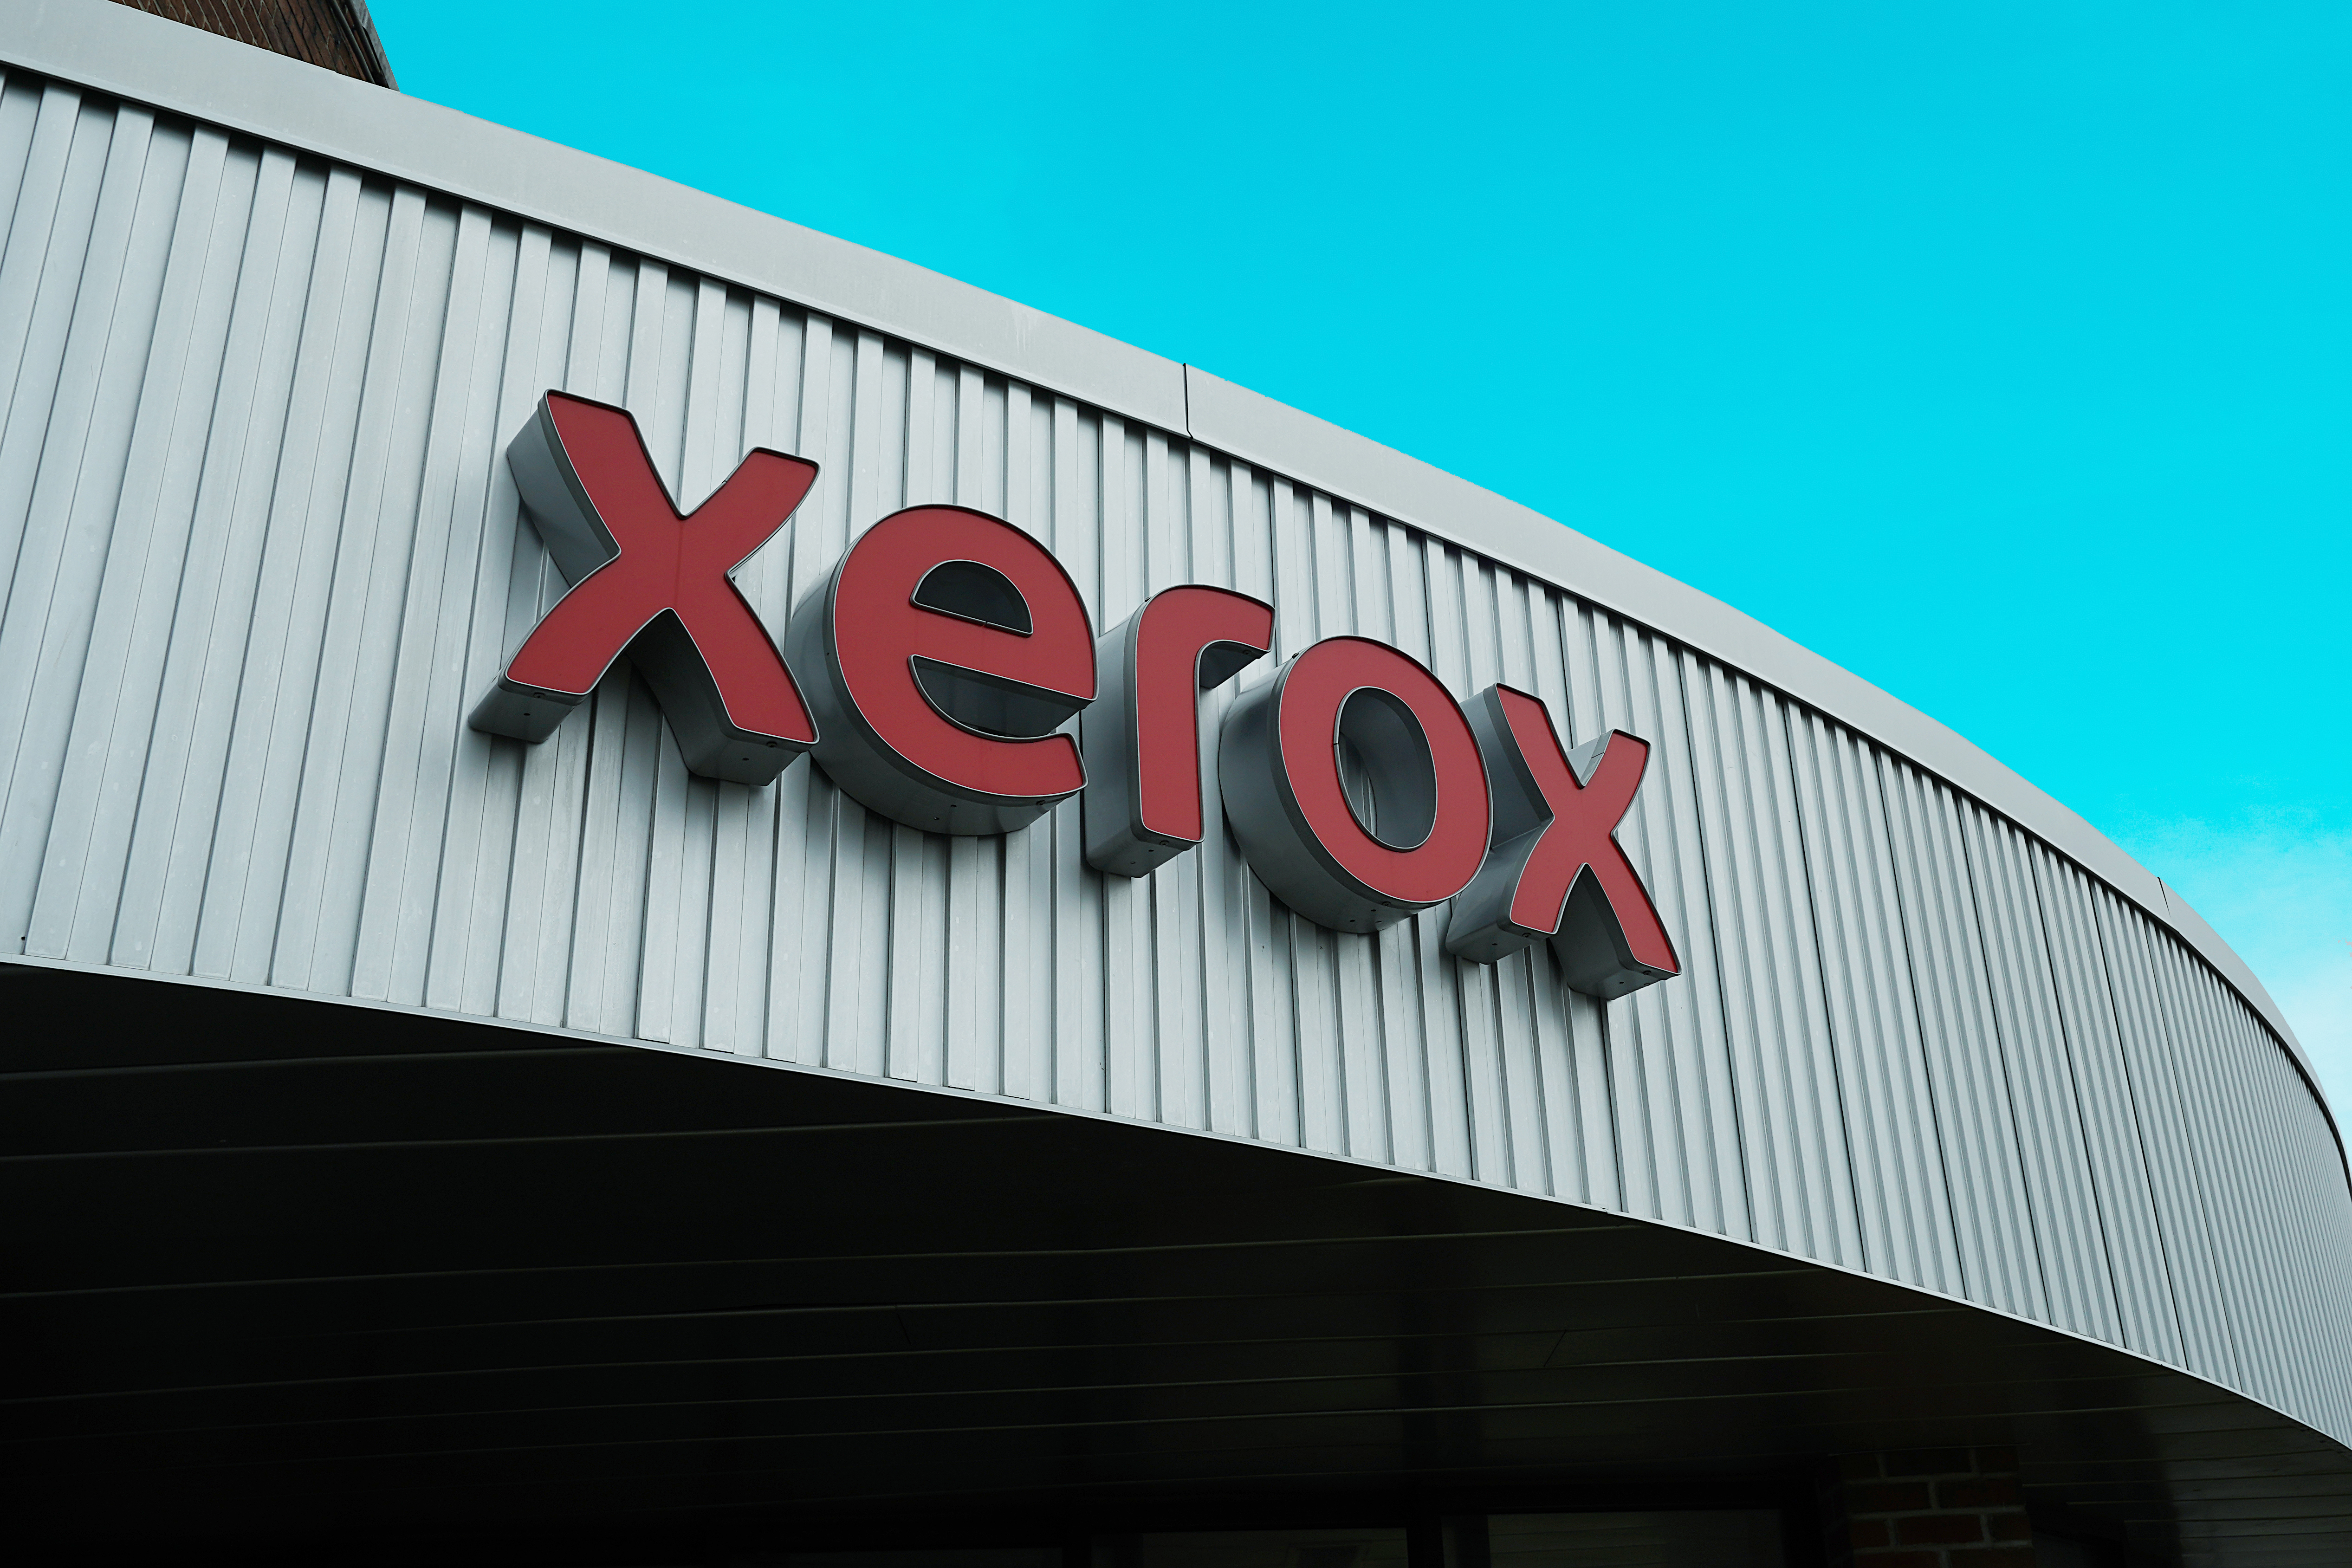 xerox-logo-sign.jpeg